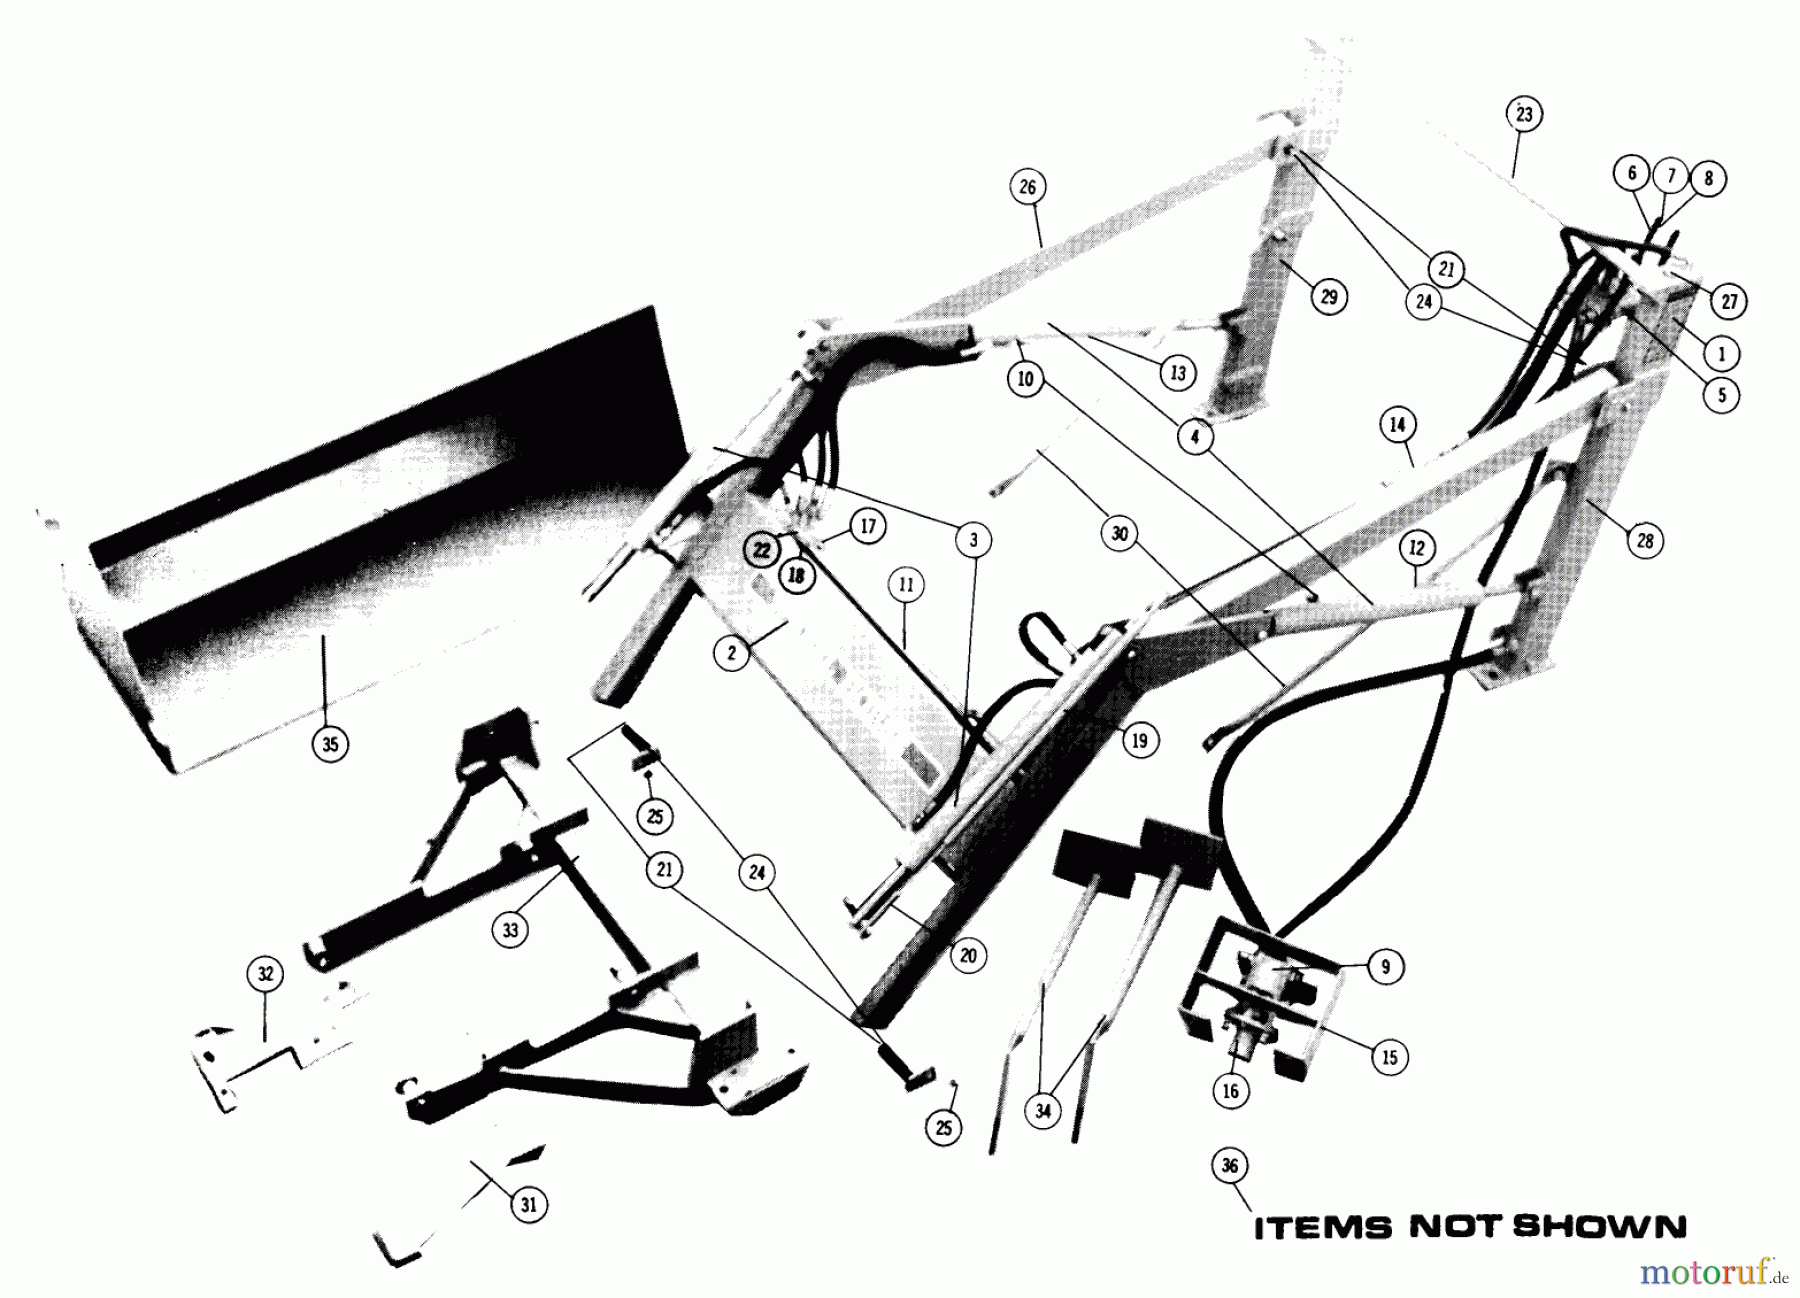  Toro Neu Accessories 87-72FL01 - Toro Loader Frame, 1978 PARTS LIST FOR FRONT LOADER VEHICLE IDENTIFICATION NUMBERS 87-72FL01/87-48BK01